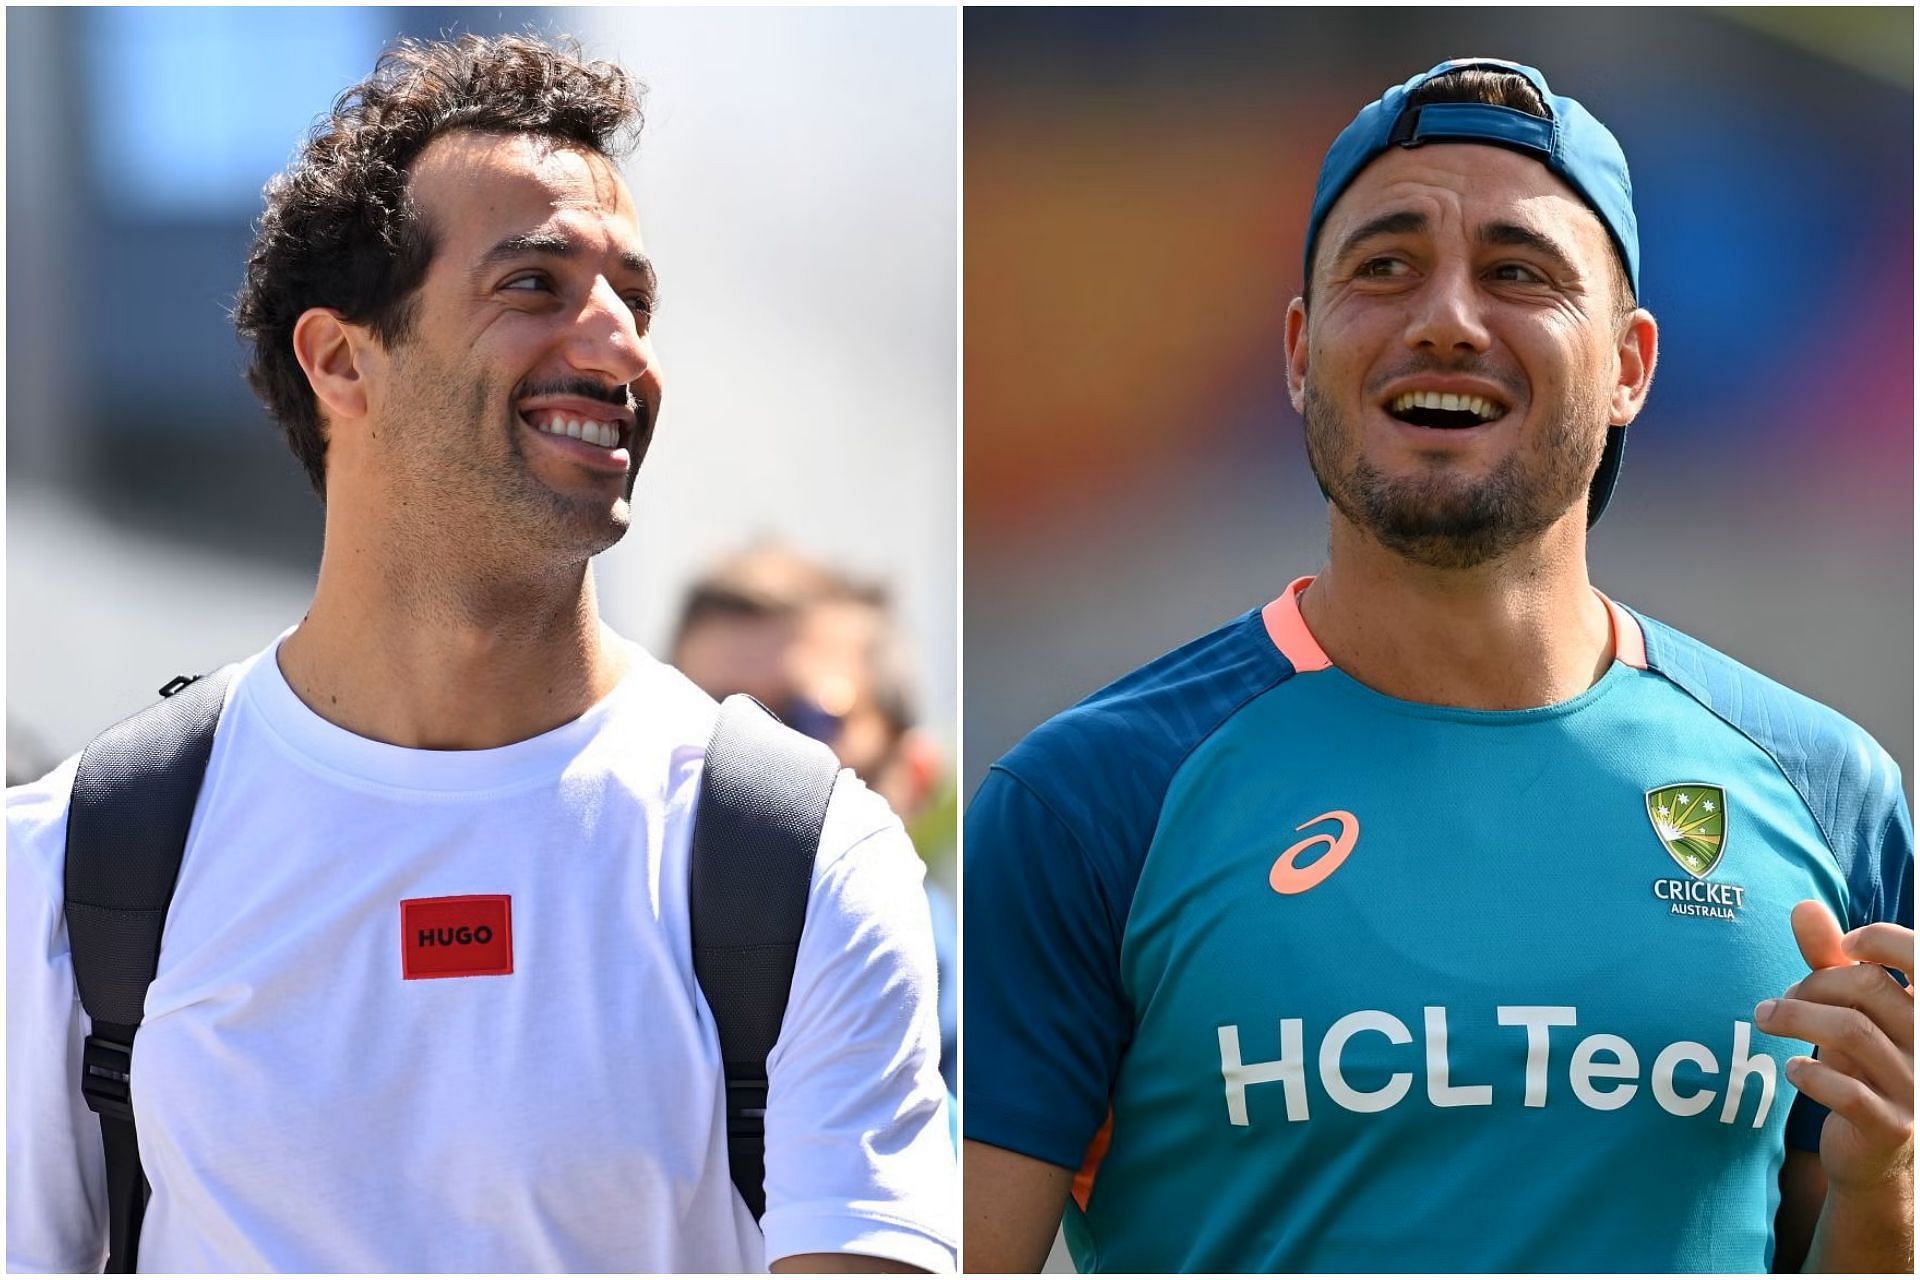 Daniel Ricciardo (L) and Marcus Stoinis (R) (Collage via Sportskeeda)